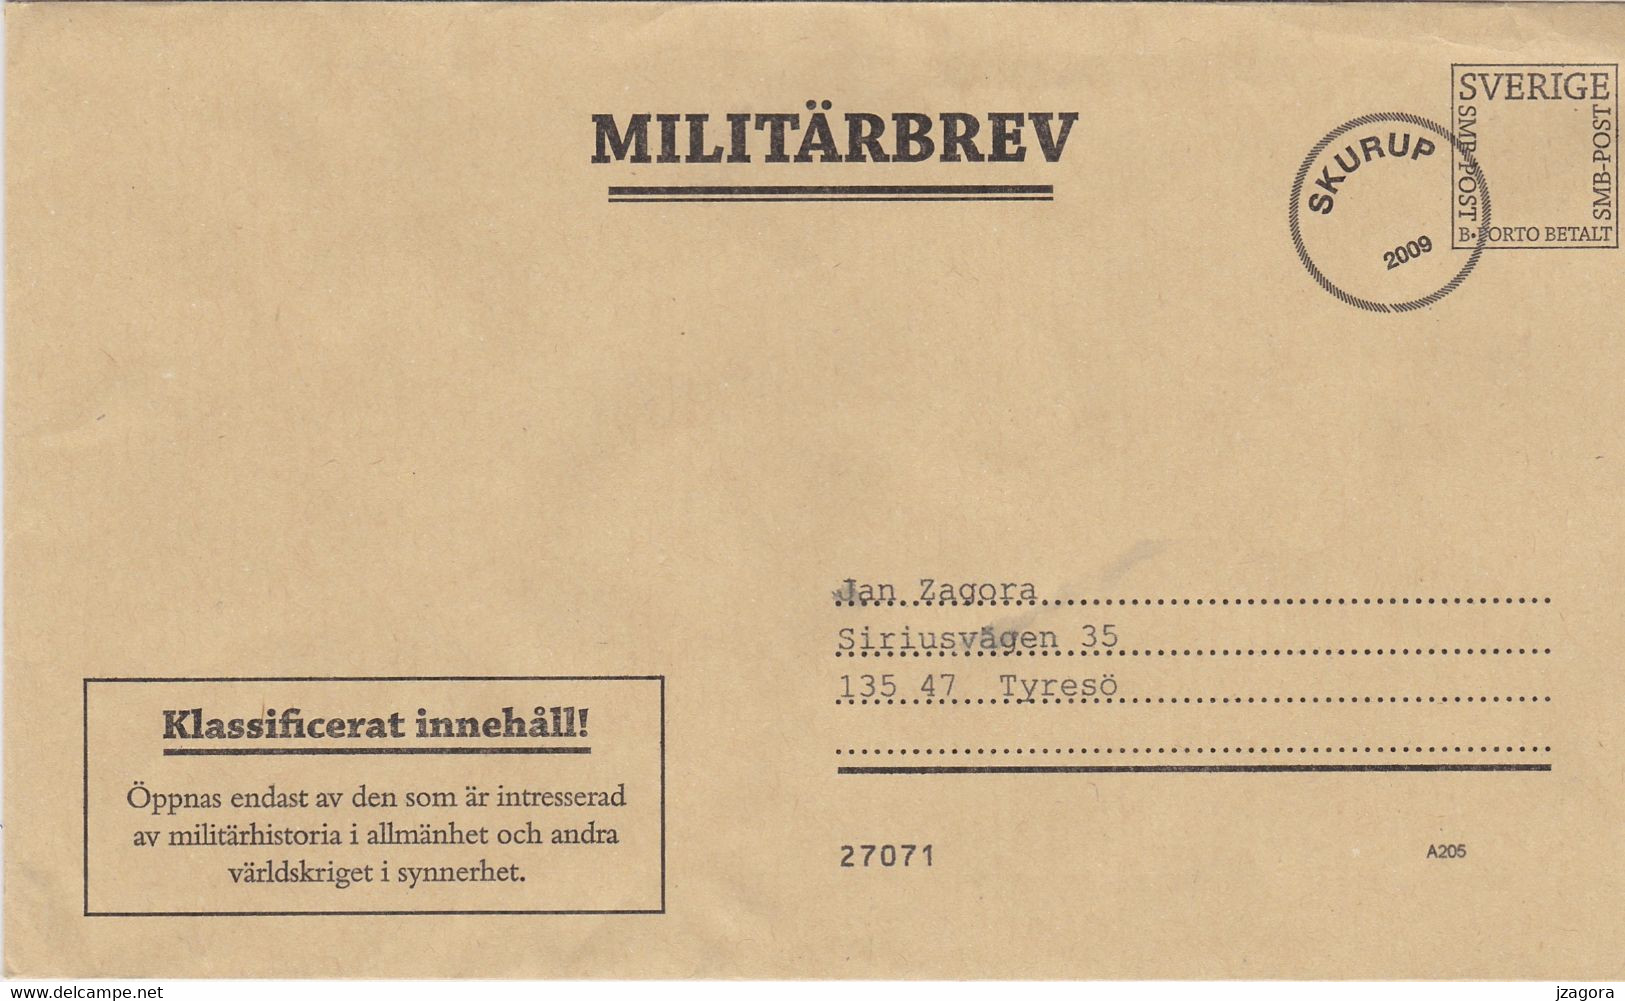 SWEDISH MILITARY PREPAID COVER  COUVERTURE PREPAYE MILITAIRE SUEDOISE CUBIERTA MILITAR PREPAGO - SWEDEN SUEDE SCHWEDEN - Military